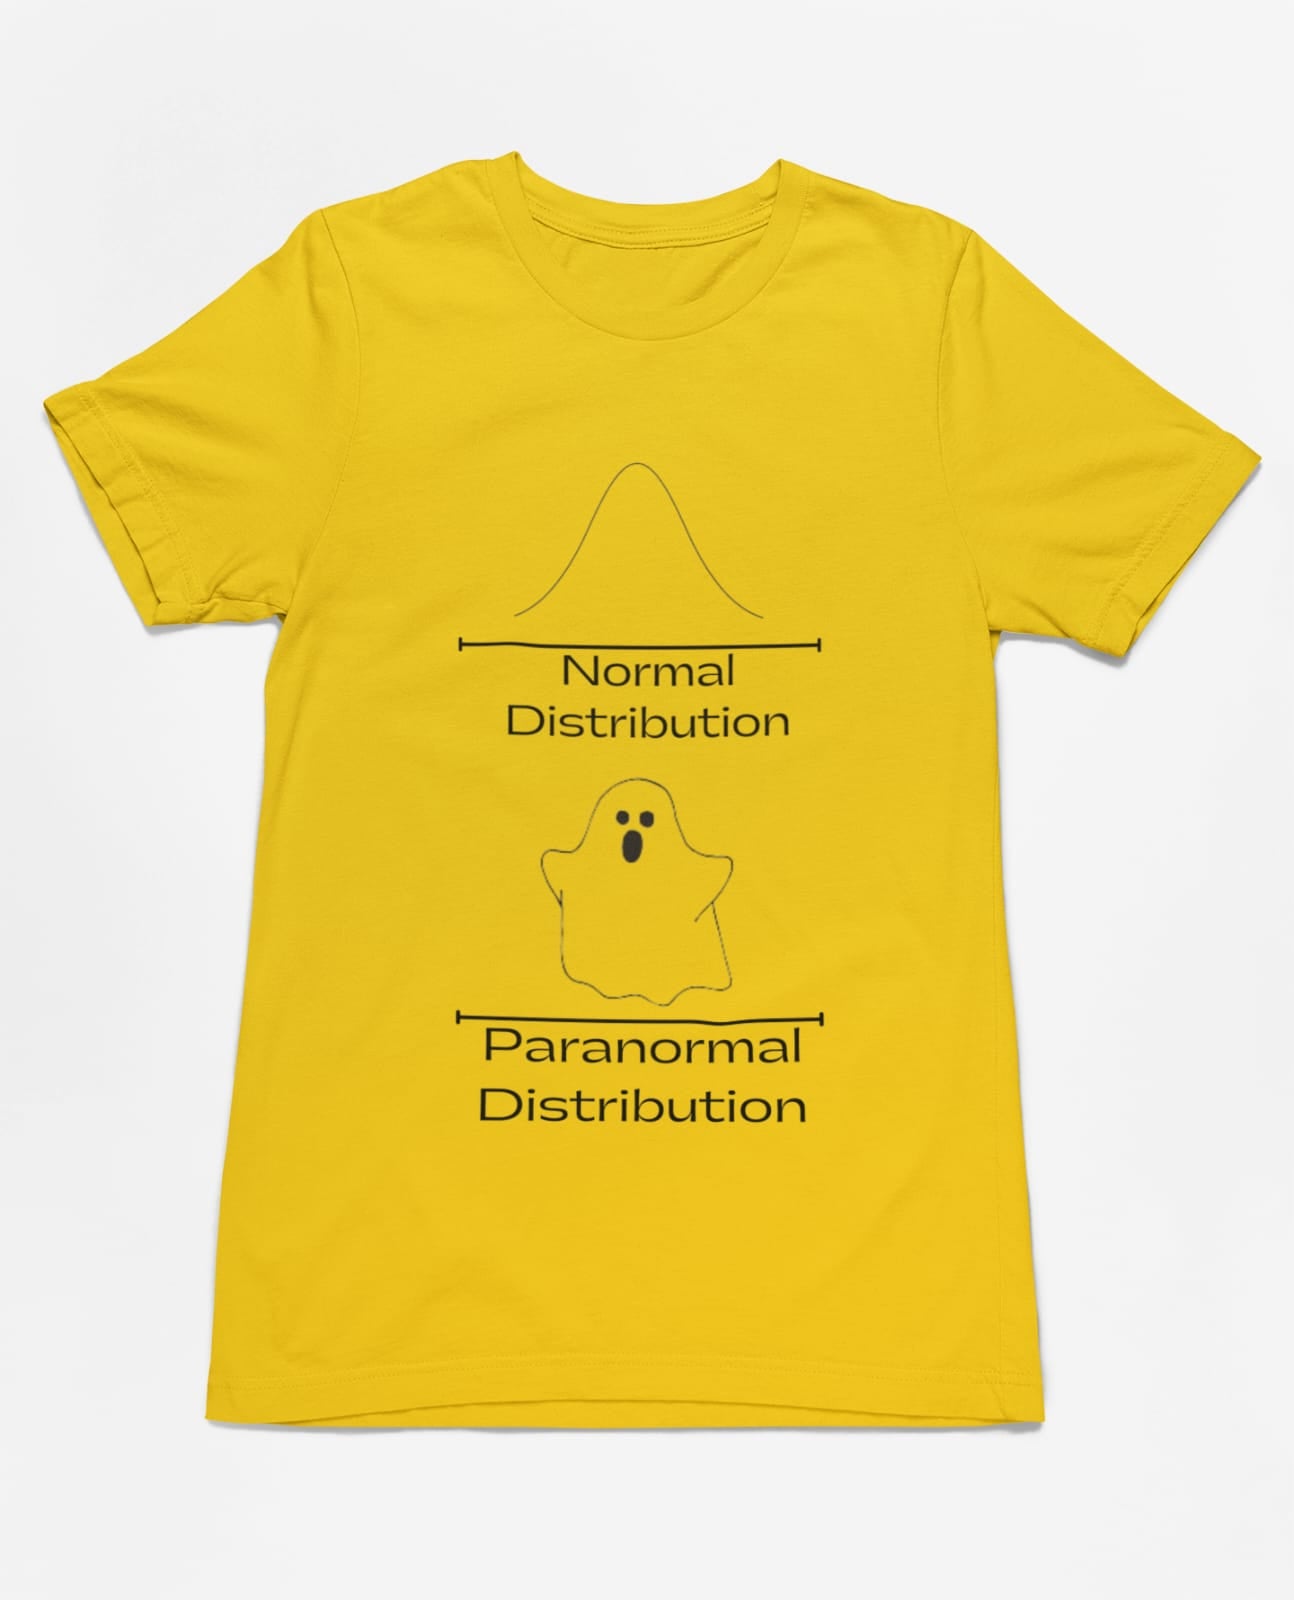 Paranormal Distribution | Half Sleeve Unisex T-Shirt